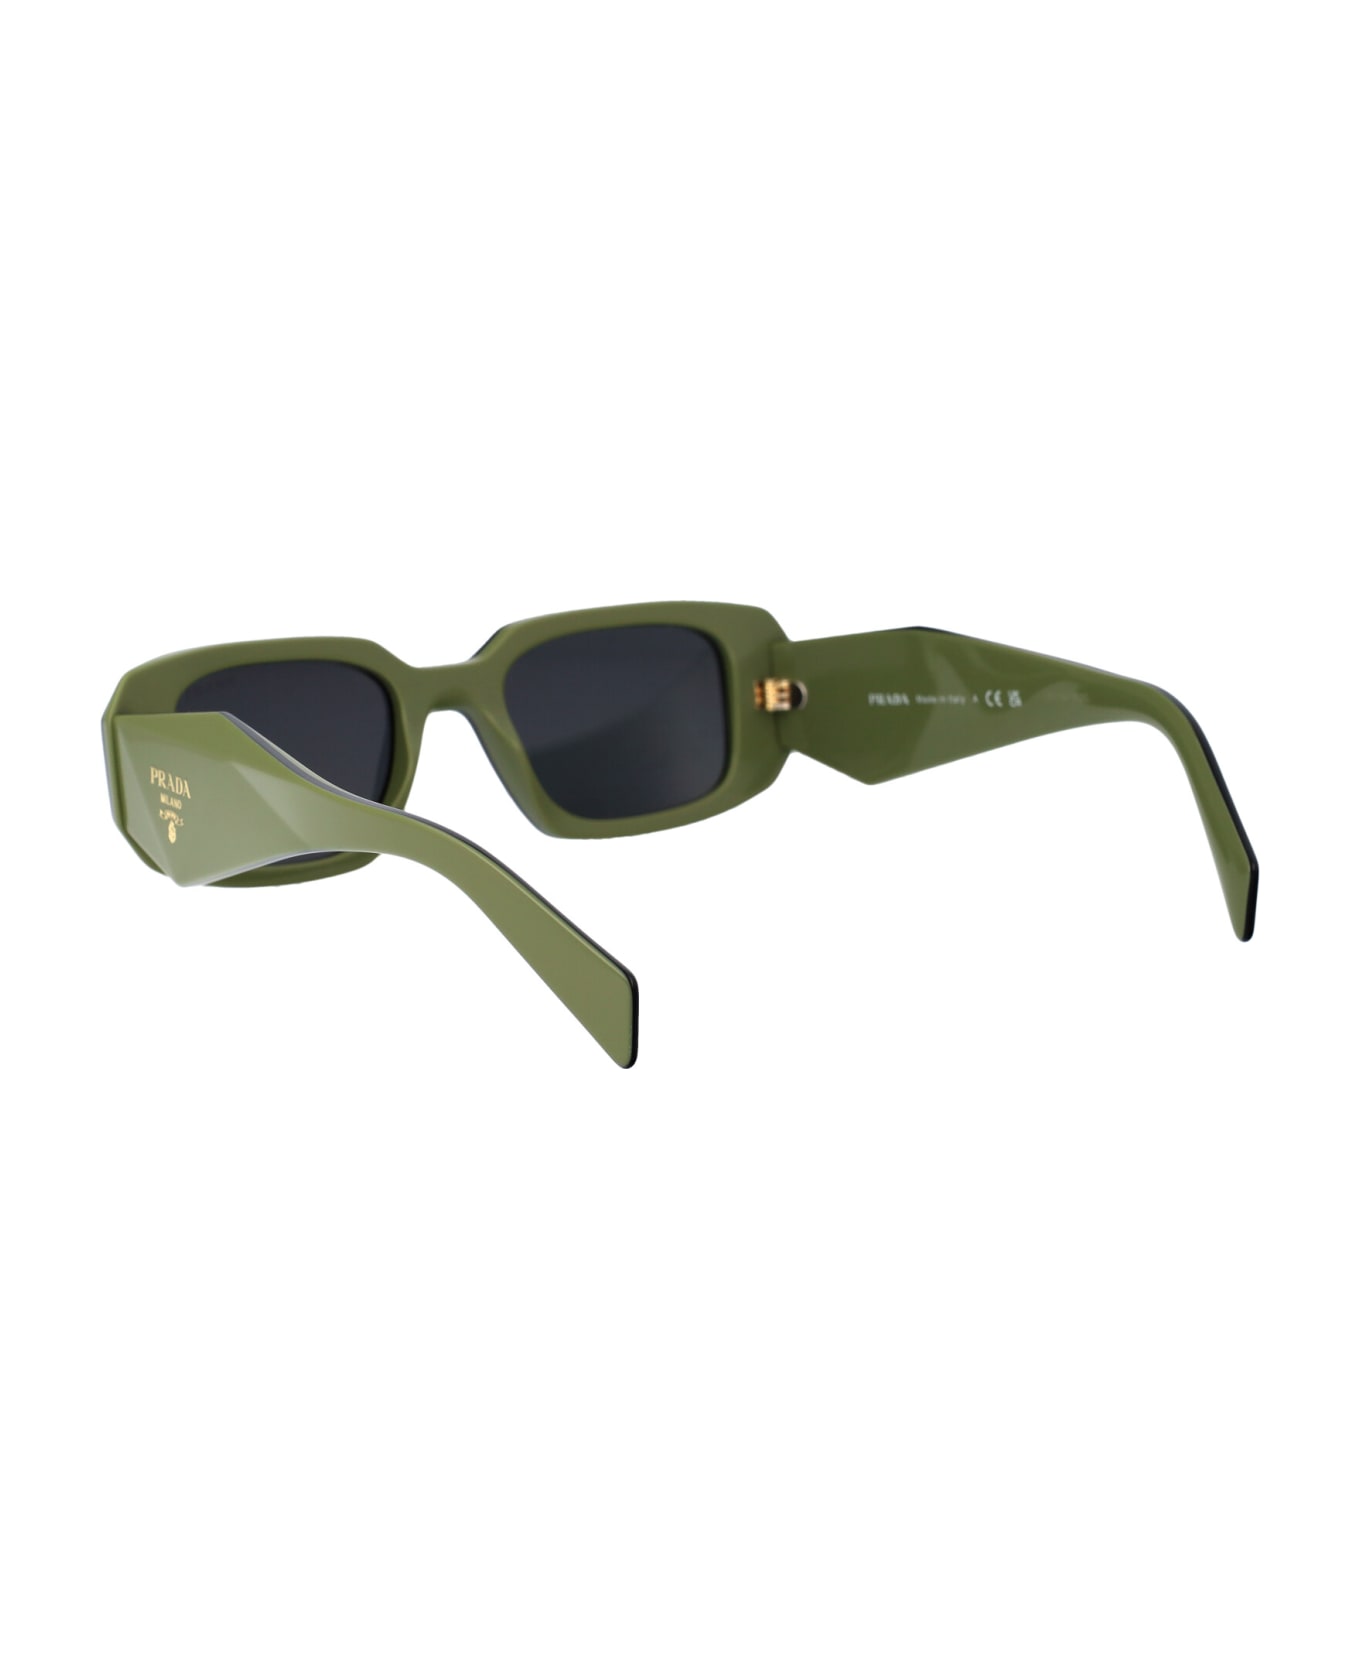 Prada Eyewear 0pr 17ws Sunglasses - 13N5S0 Sage/Black サングラス